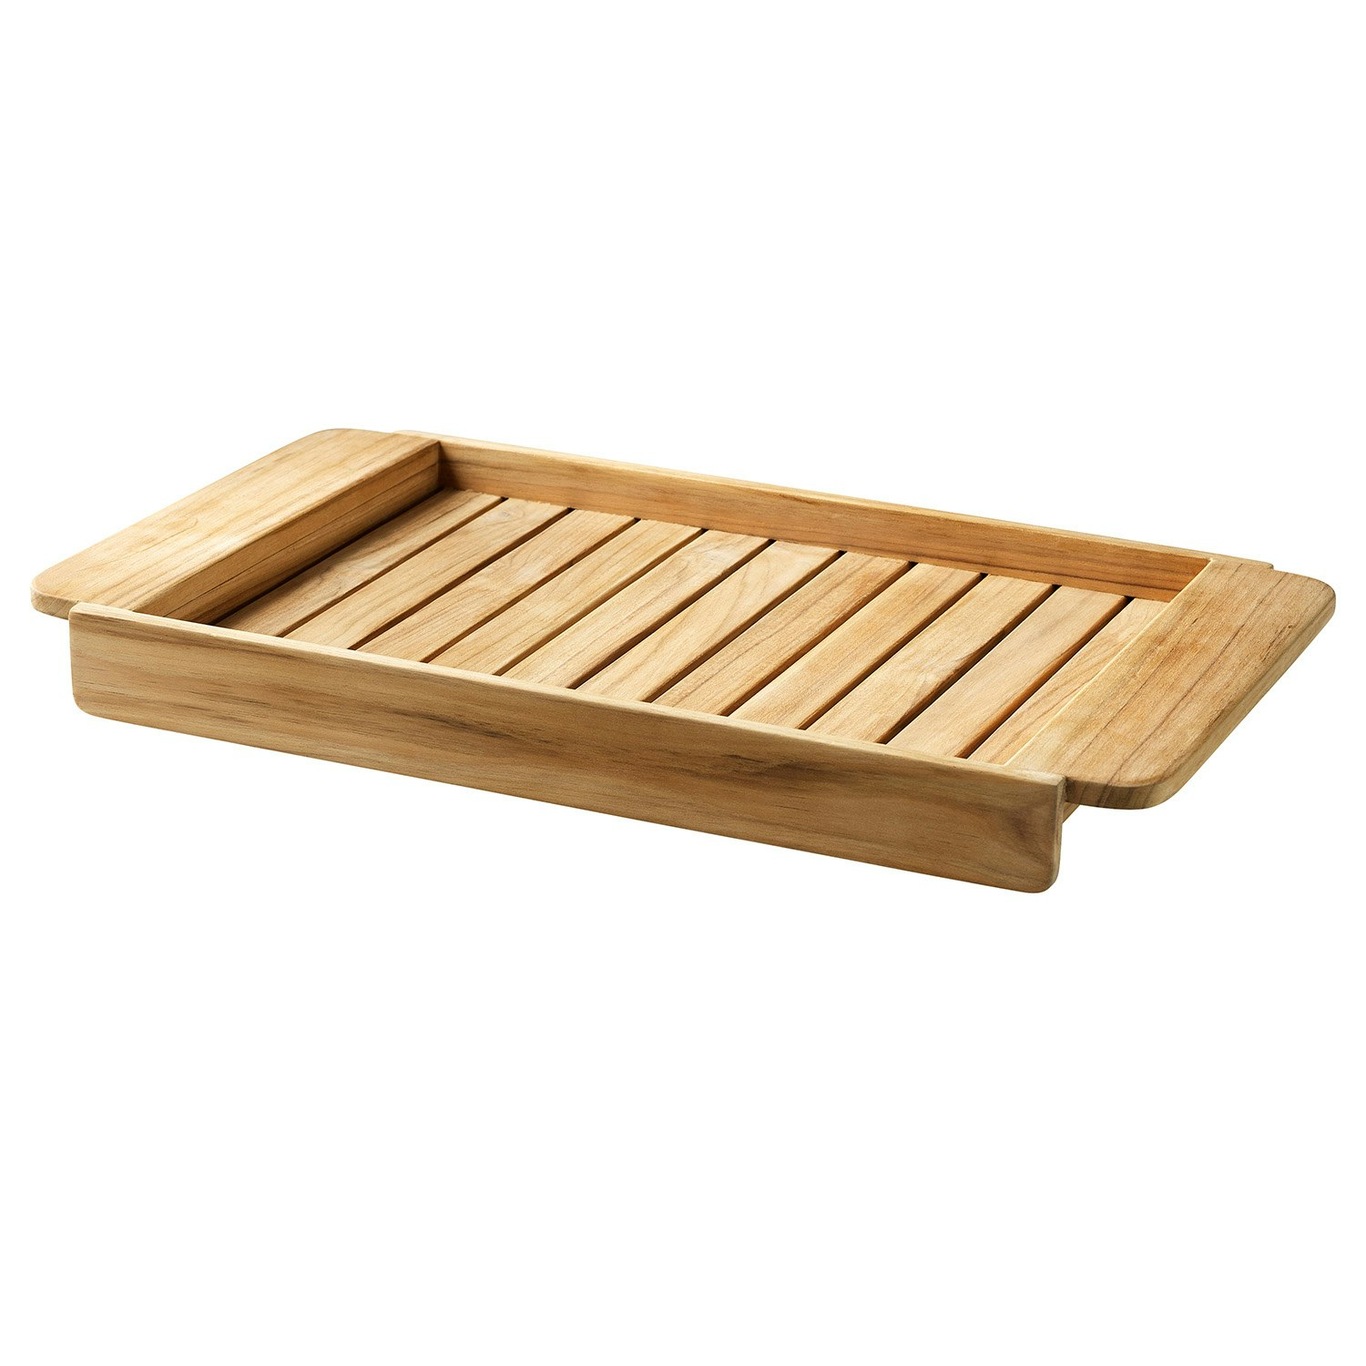 https://royaldesign.com/image/2/fdb-mbler-m9-sammen-tray-outdoor-teak-4?w=800&quality=80